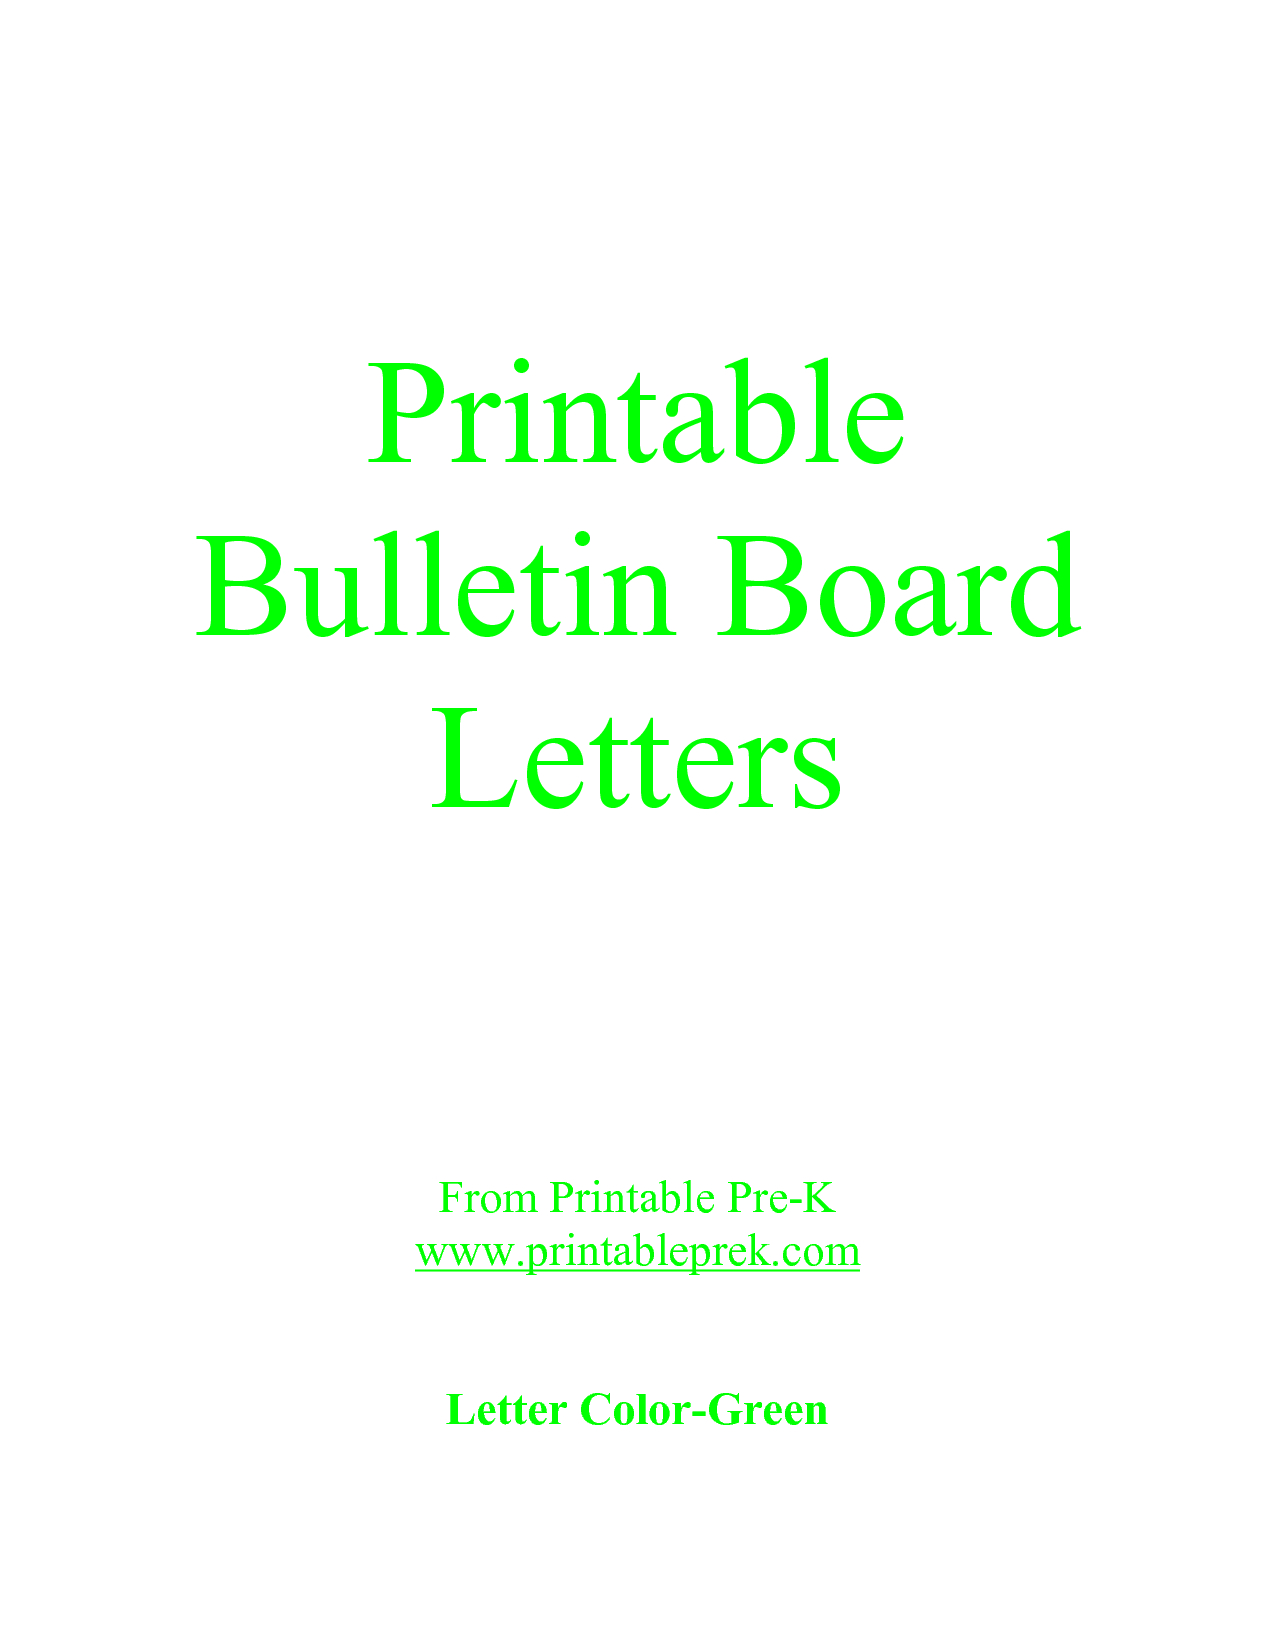 Free Printable Letter Templates For Bulletin Boards | Template To - Free Printable Bulletin Board Letters